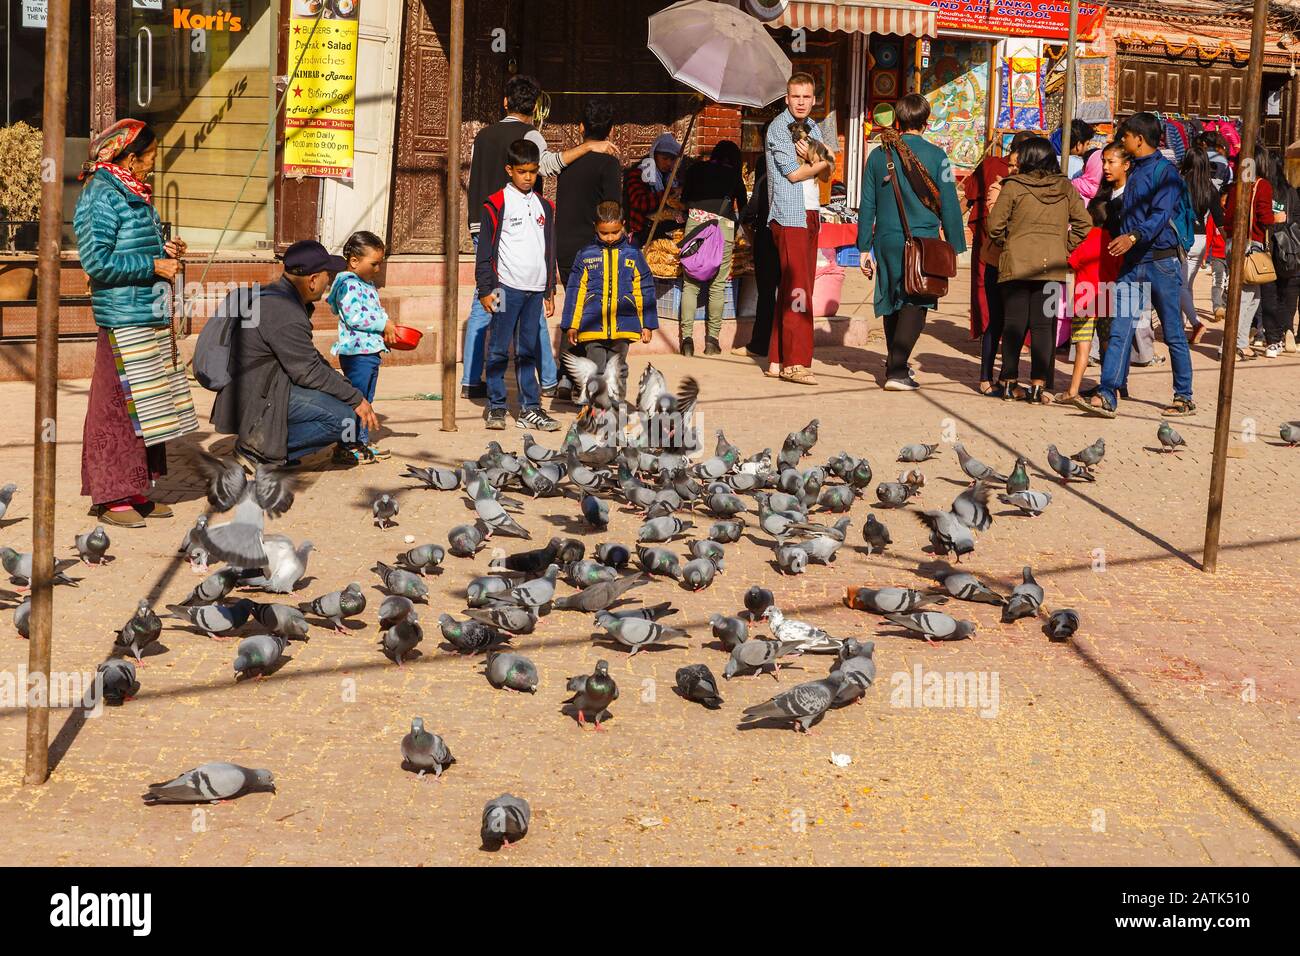 Katamandu, Nepal - November 12, 2016: Nepalese children feed pigeons in Boudhanath square in Kathmandu. Bouddha Stupa. Stock Photo